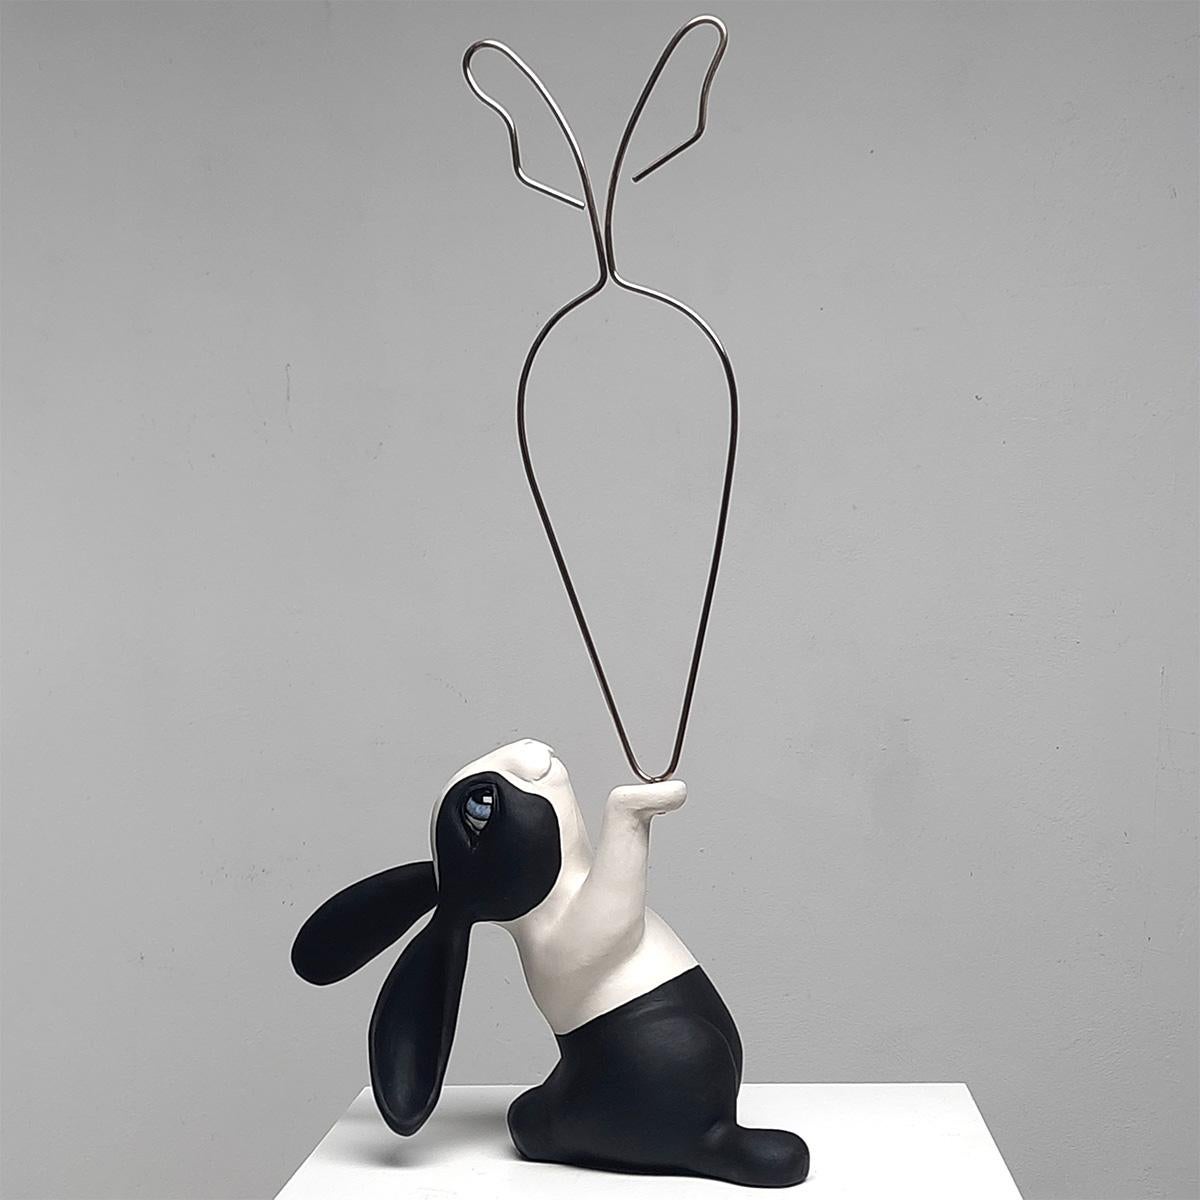 24 Carrot Gold-original realism wildlife sculpture-artwork-contemporary art - Sculpture by Henk Jan Sanderman